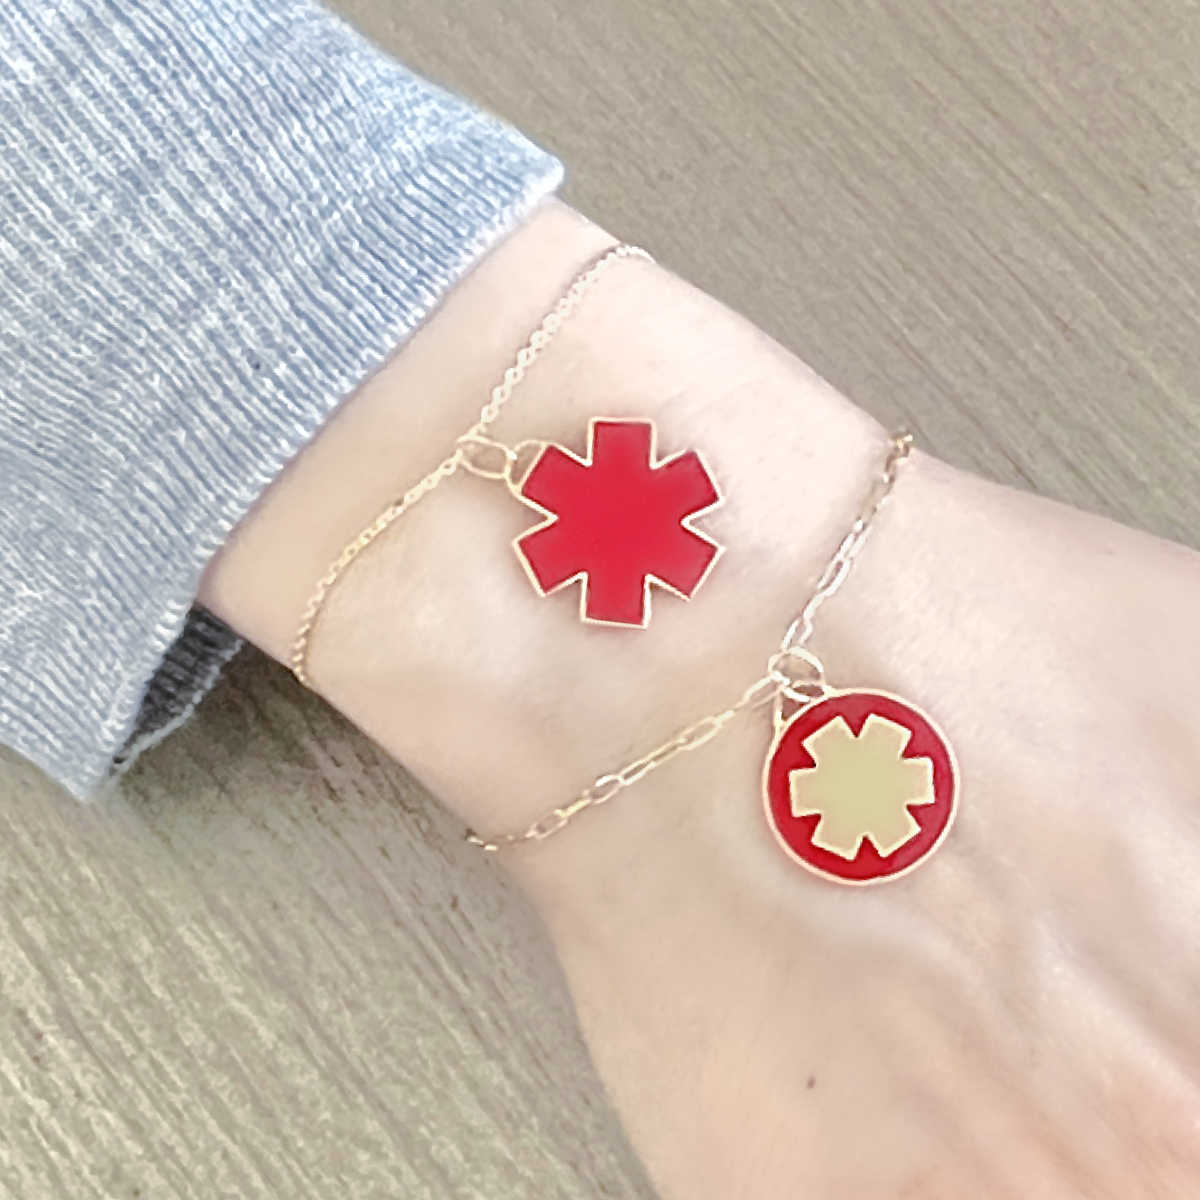 Gold Medical Alert Bracelet or Necklace Charm with Red Enamel | Custom Engraved Medical IDs & Diabetes Bracelets | CHARMED Medical Jewelry